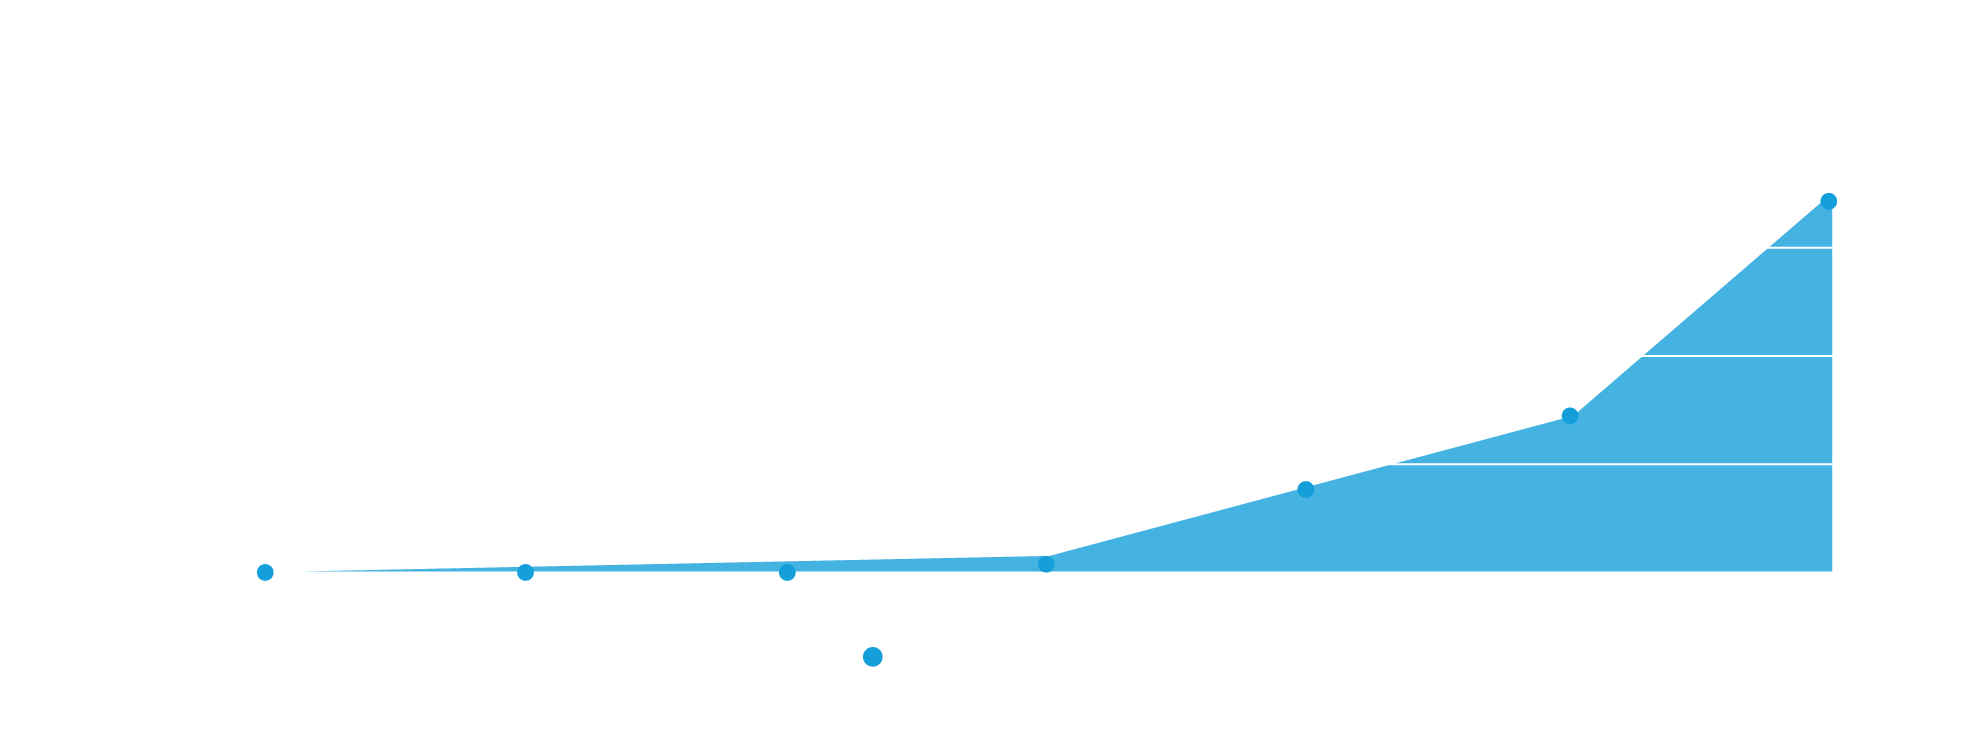 MNT-Halan Total Cumulative Funding